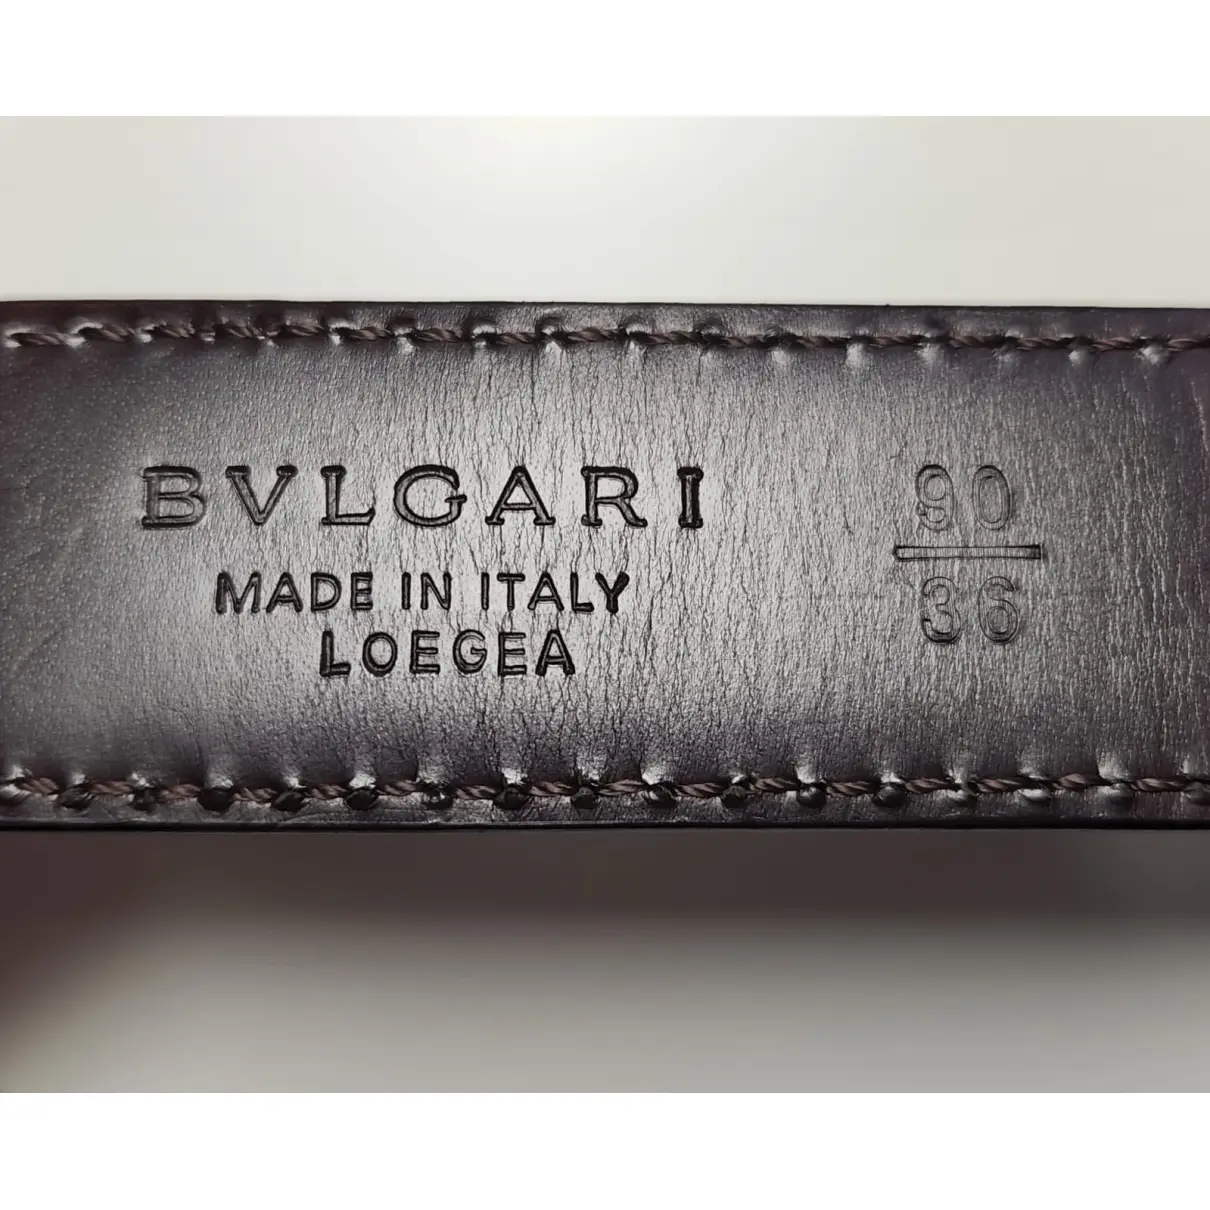 Buy Bvlgari Leather belt online - Vintage